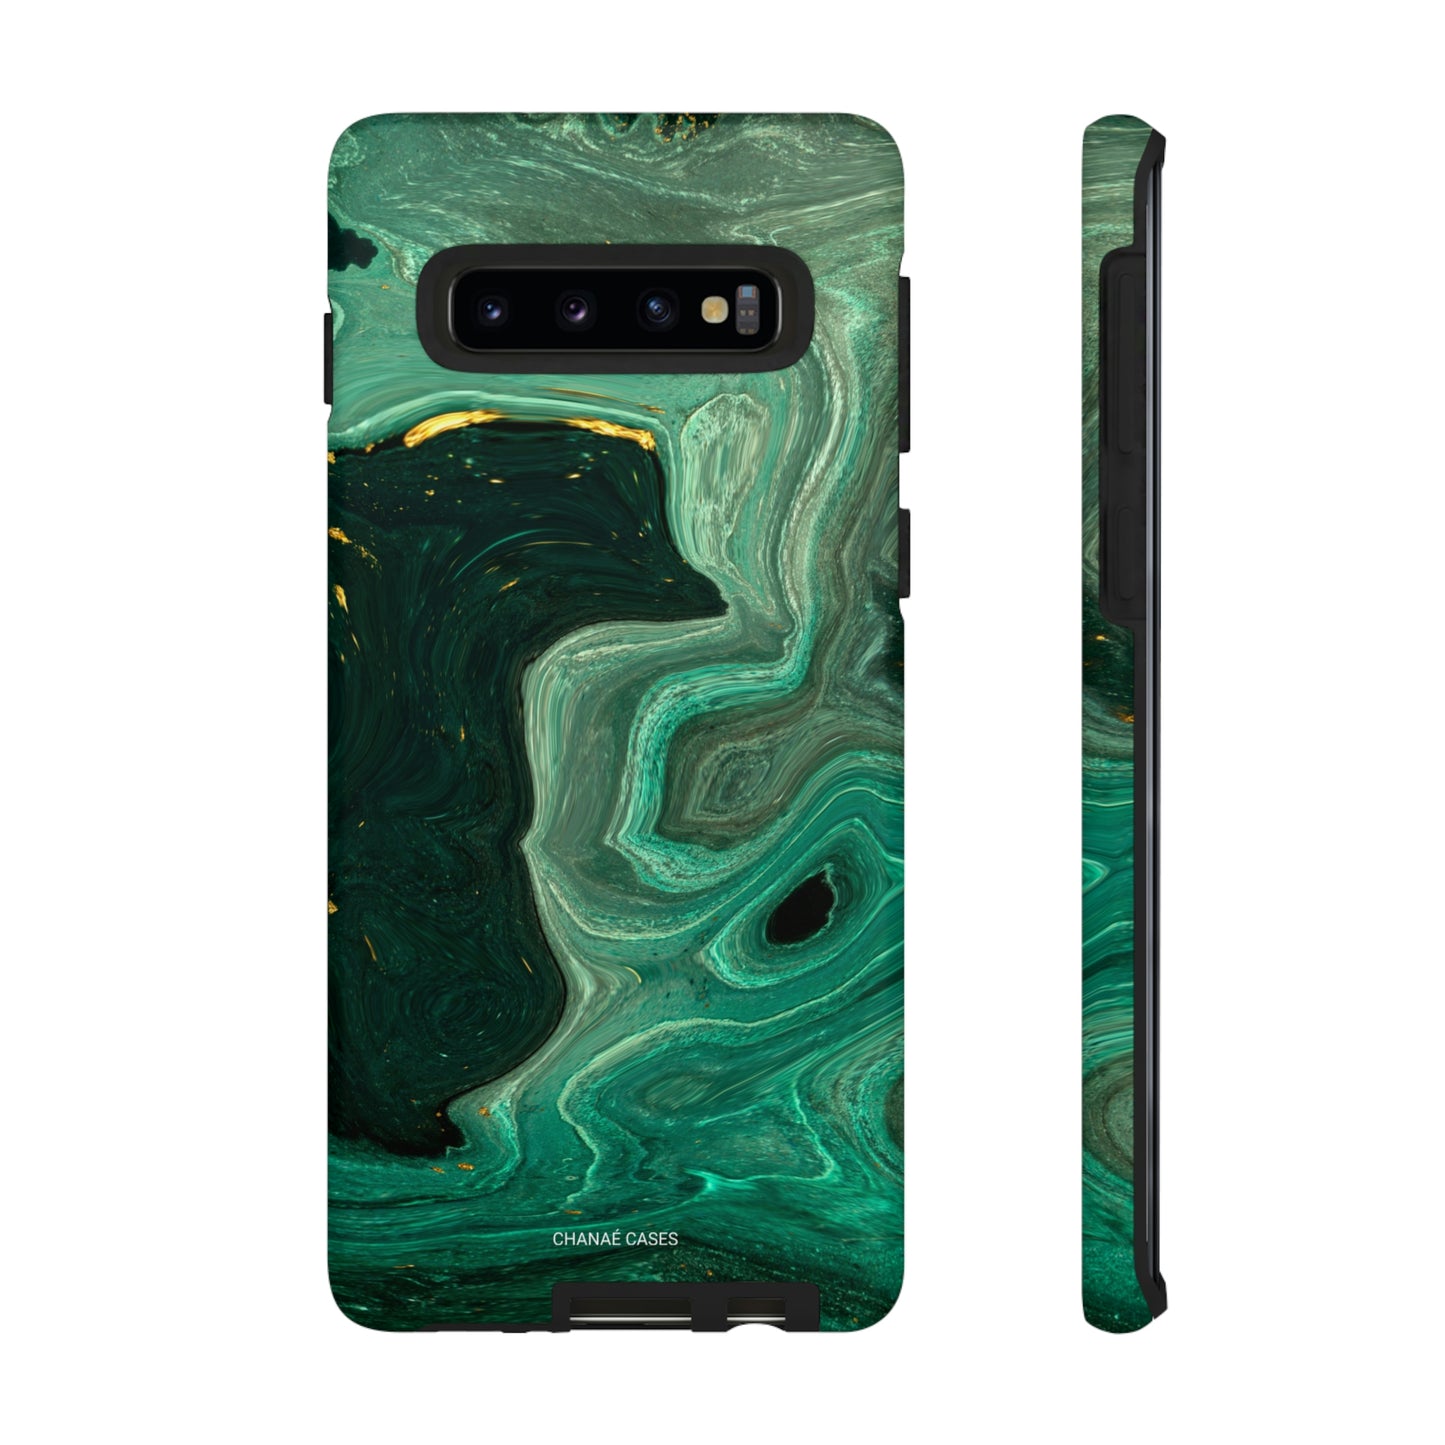 Ayo Samsung "Tough" Case (Green/Black)